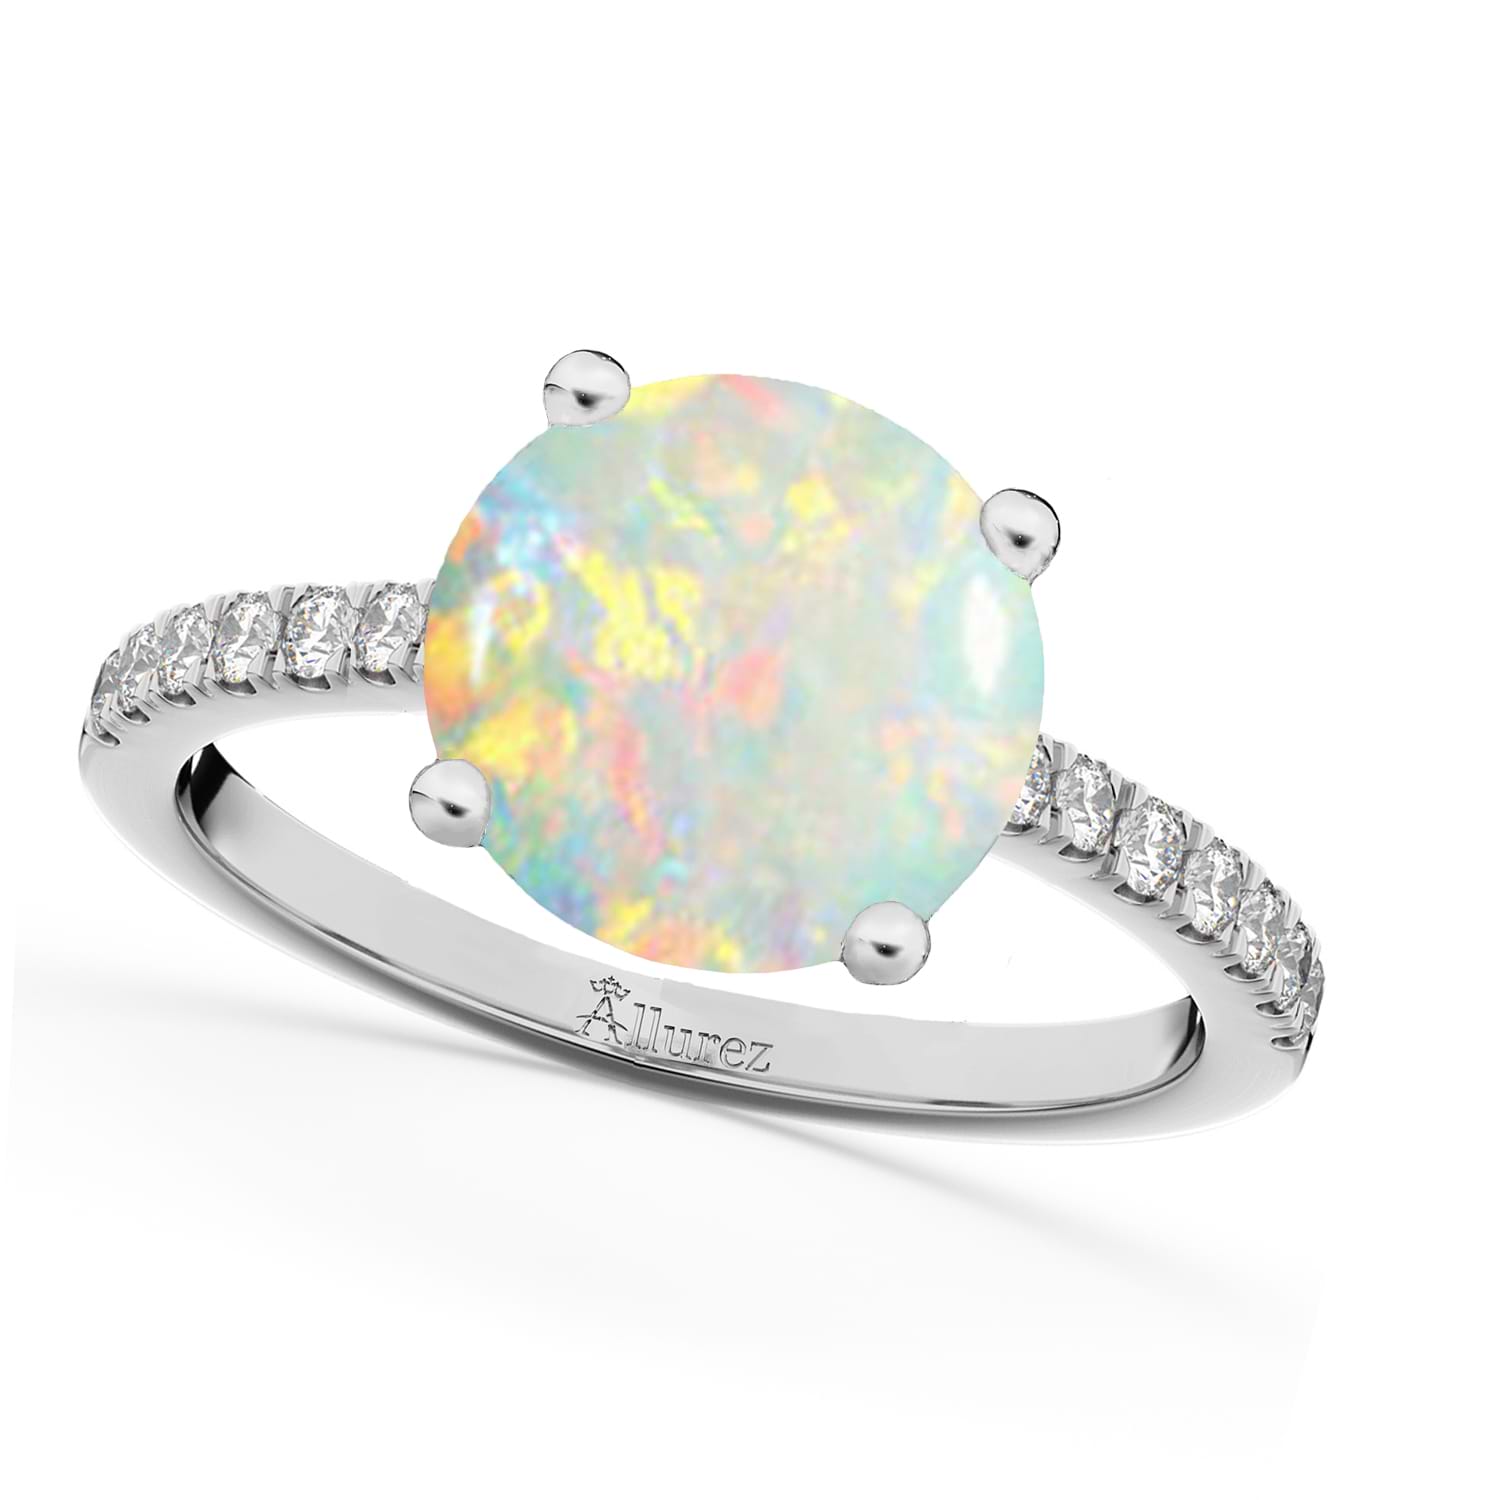 Opal & Diamond Engagement Ring Palladium 1.51ct